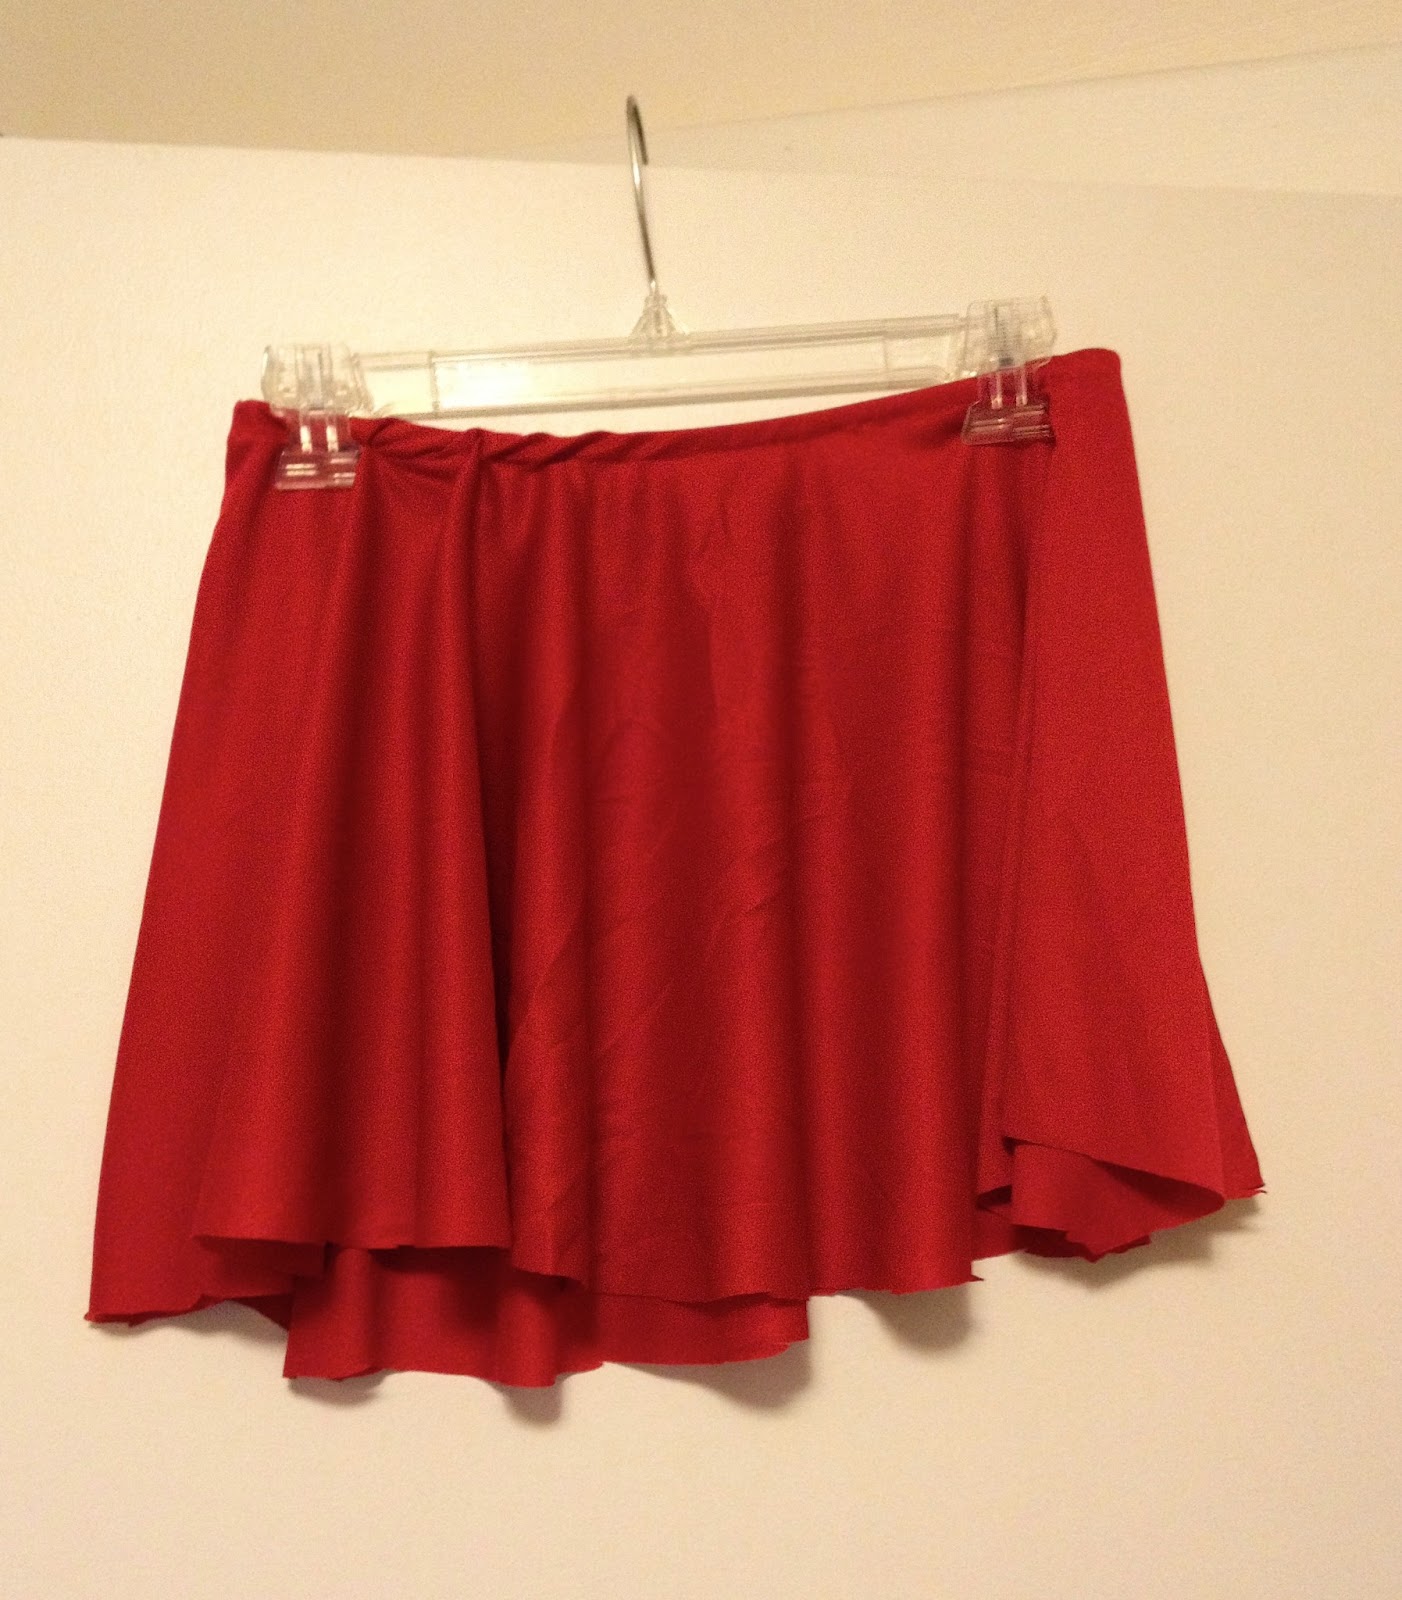 Circle skirt DIY tutorial